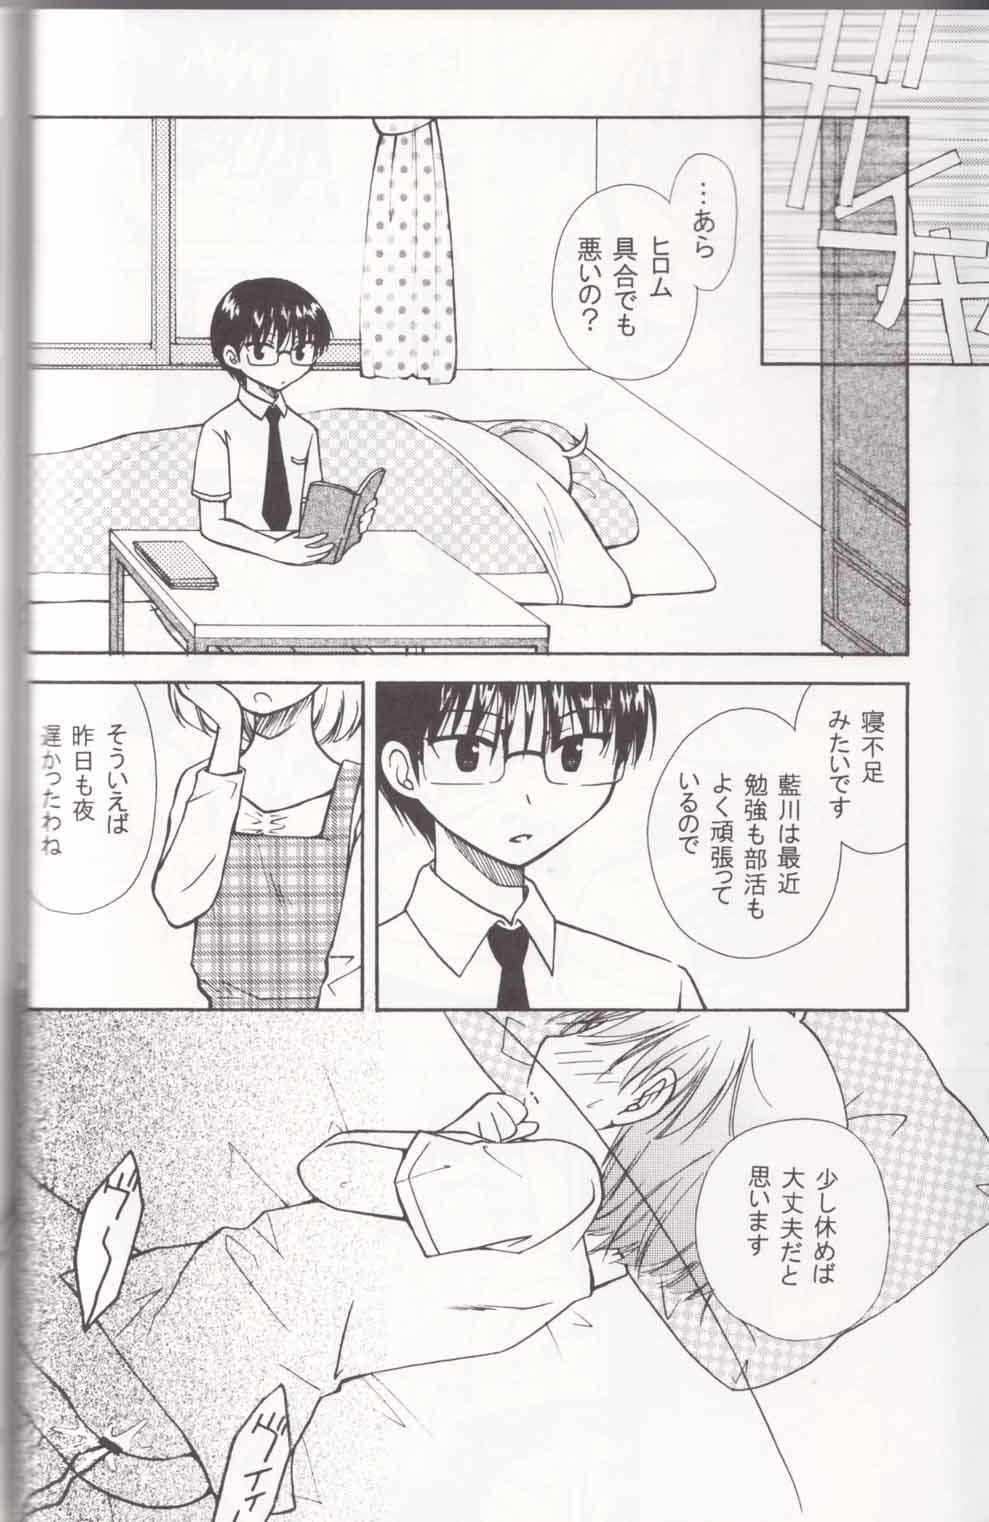 Rough Sex Boku no Sensei. - P2 lets play pingpong Shot - Page 10